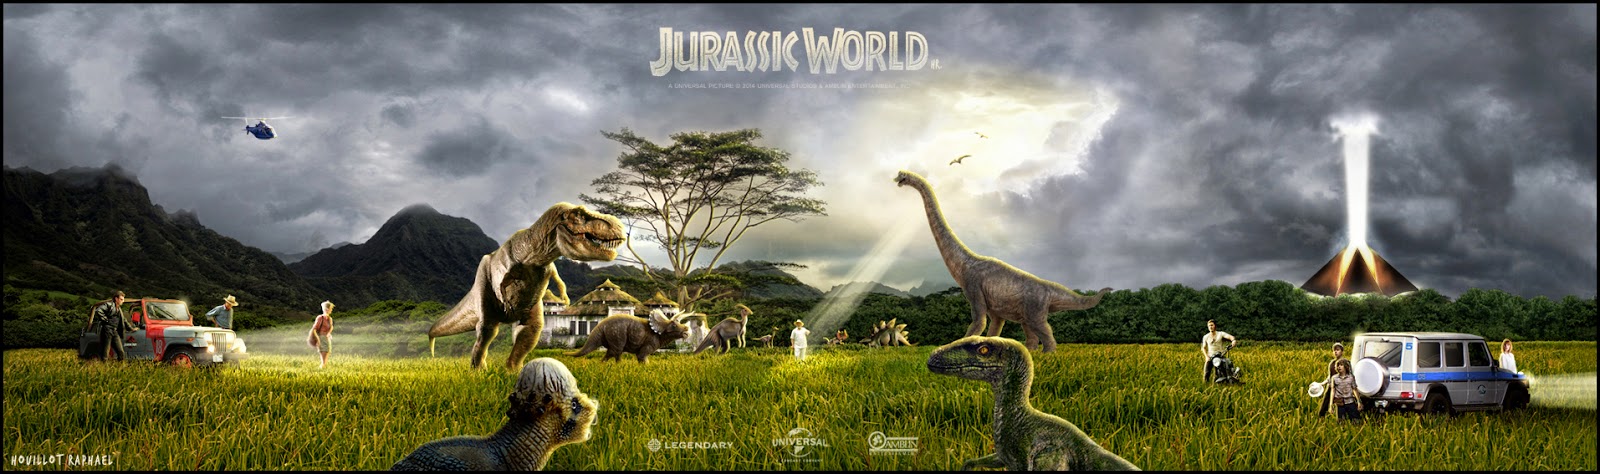 Jurassic World Movie HD Wallpaper Sharenator